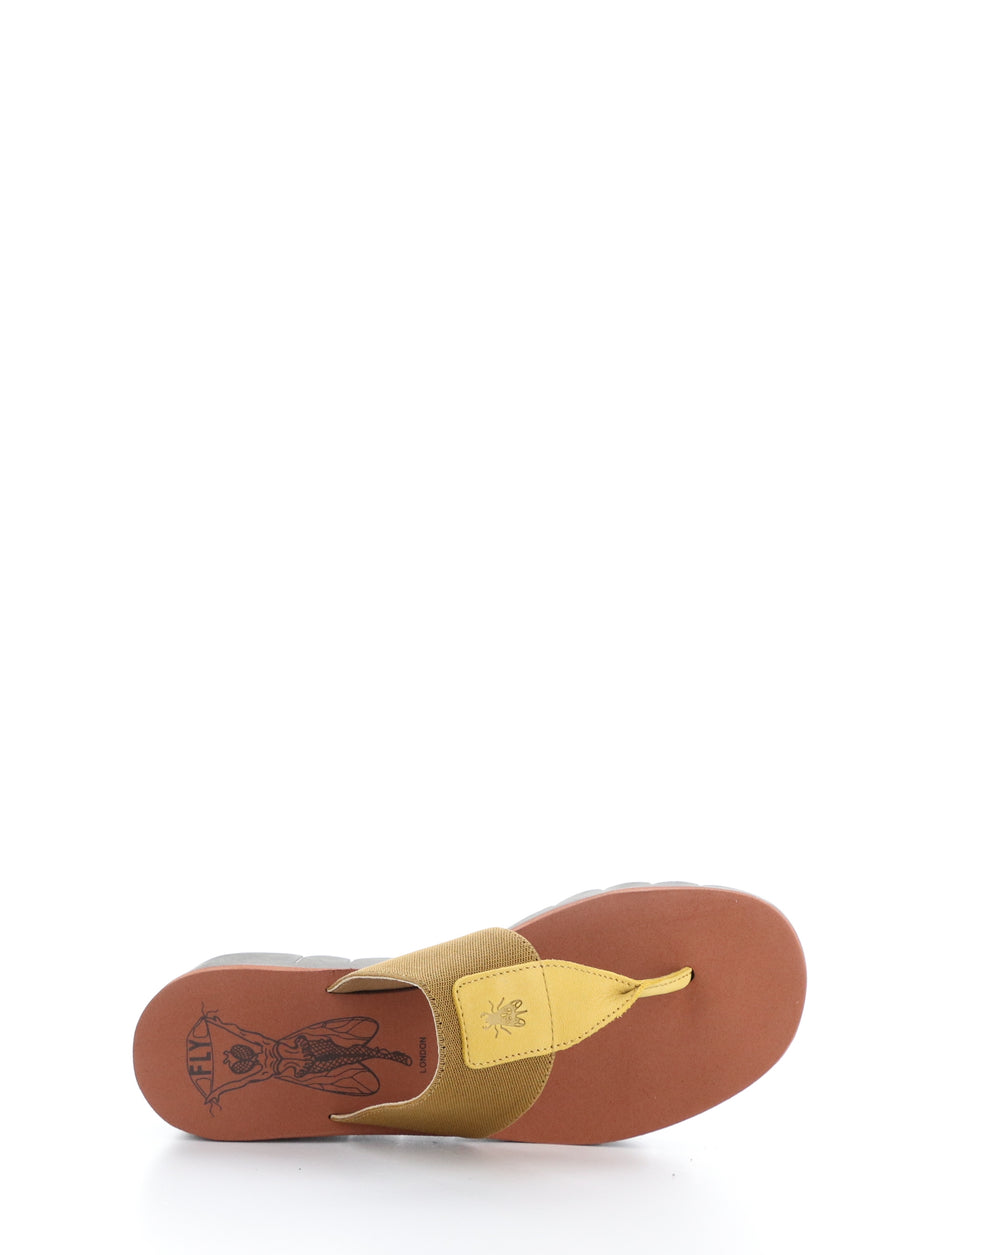 YOMU725FLY 009 BUMBLEBEE/CAMEL Slip-on Sandals